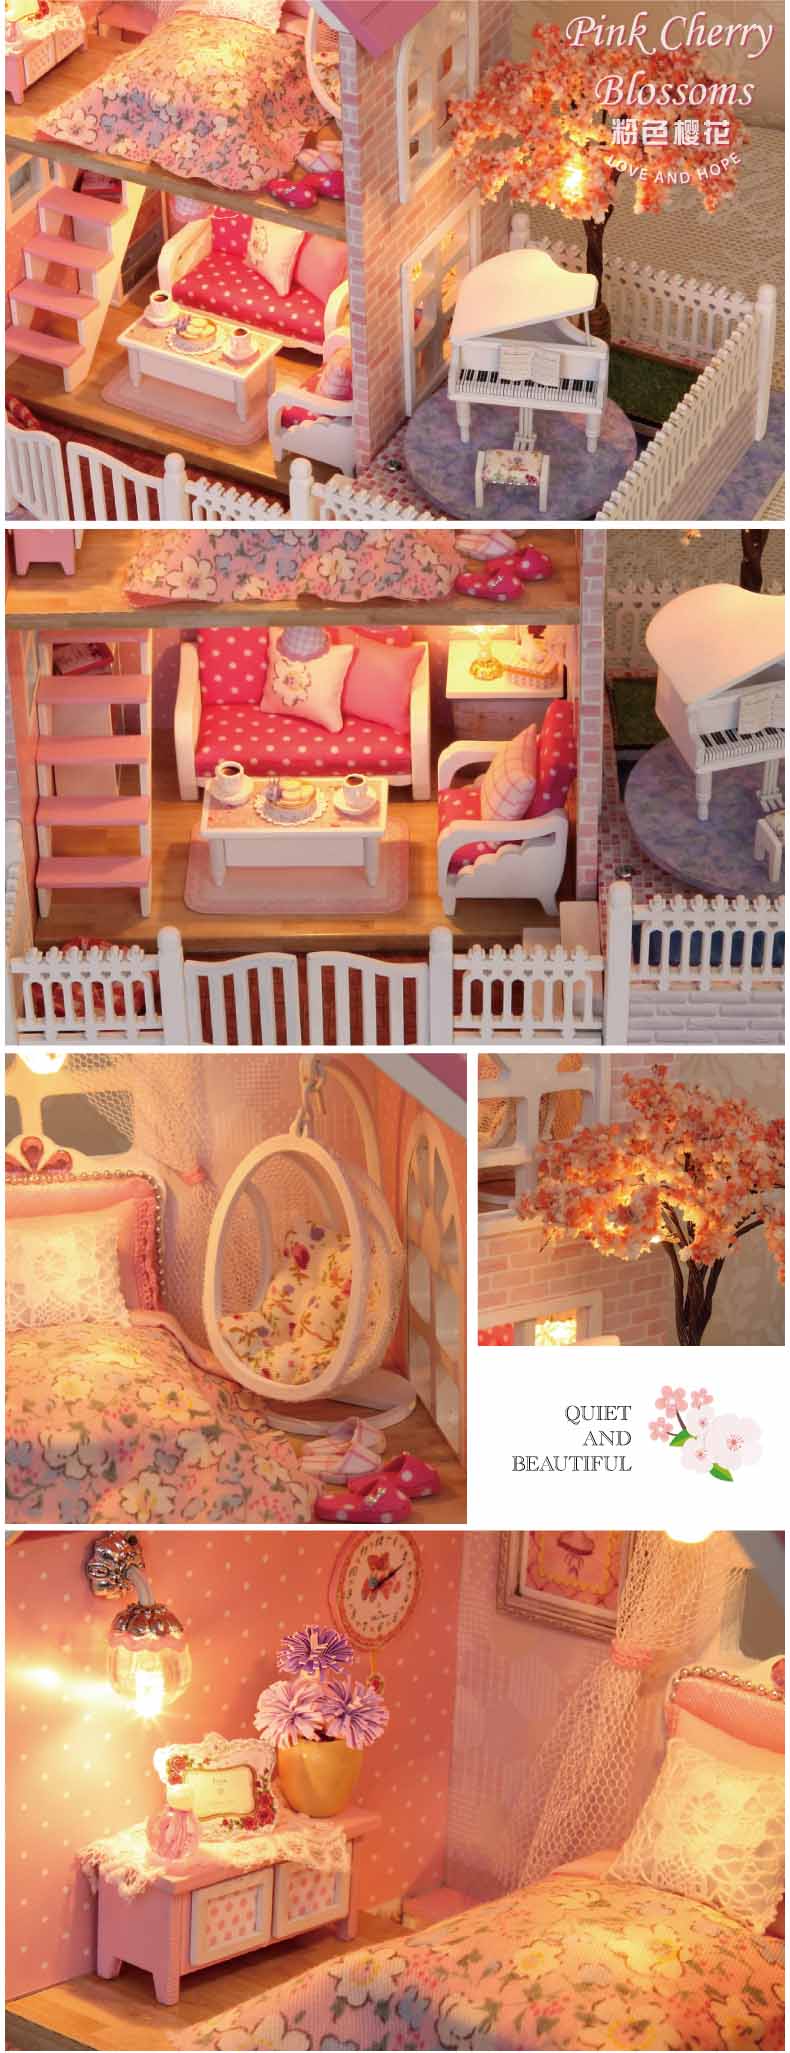 Cuteroom-124-DIY-Wooden-Dollhouse-Pink-Cherry-Handmade-Decorations-Model-with-LED-LightMusic-Birthda-1068341-11